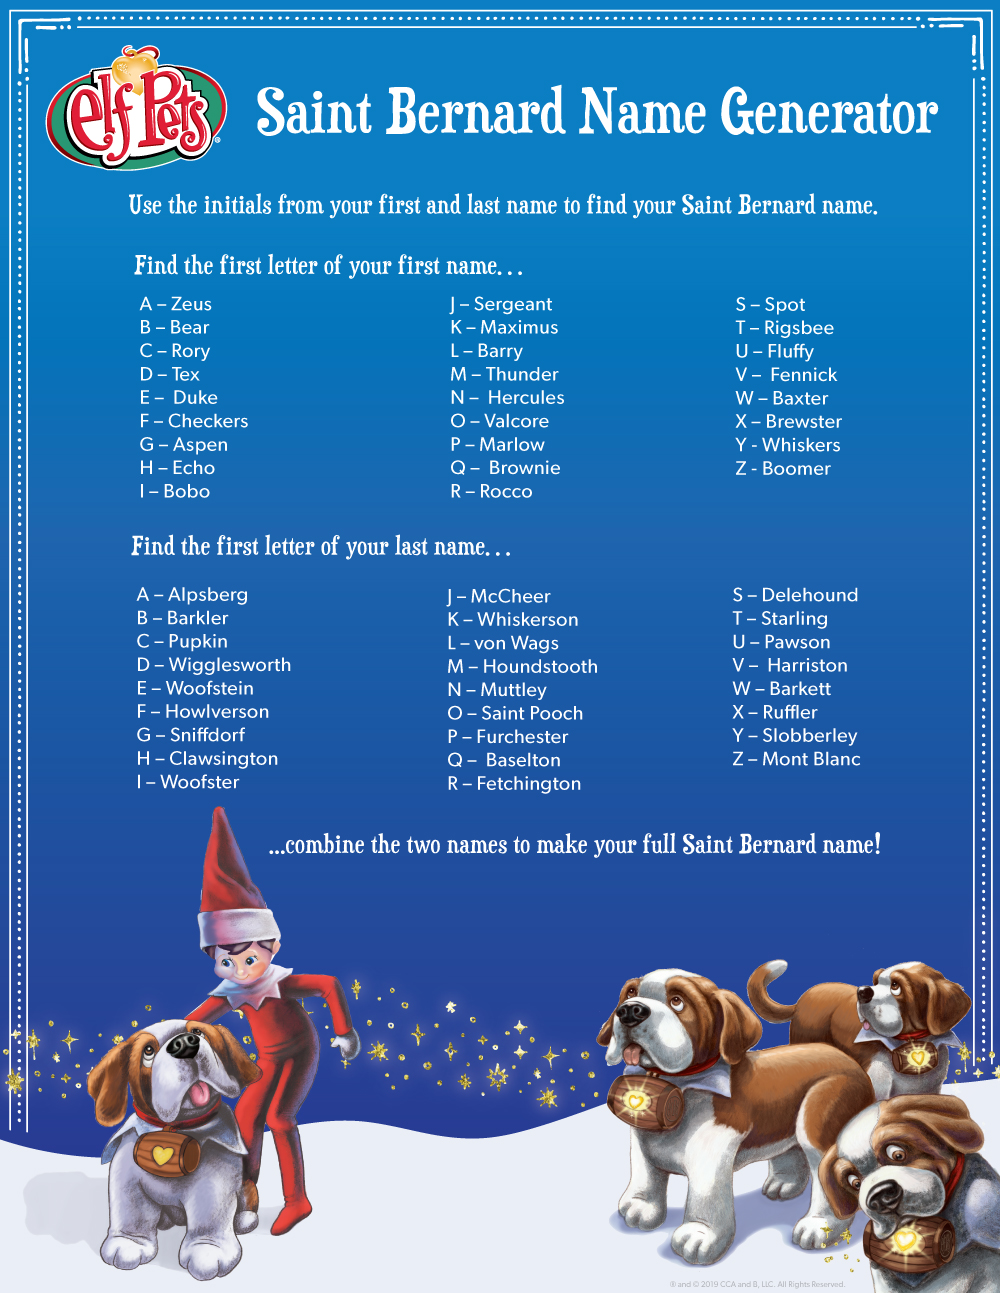 Find Your Saint Bernard Name! | The Elf on the Shelf